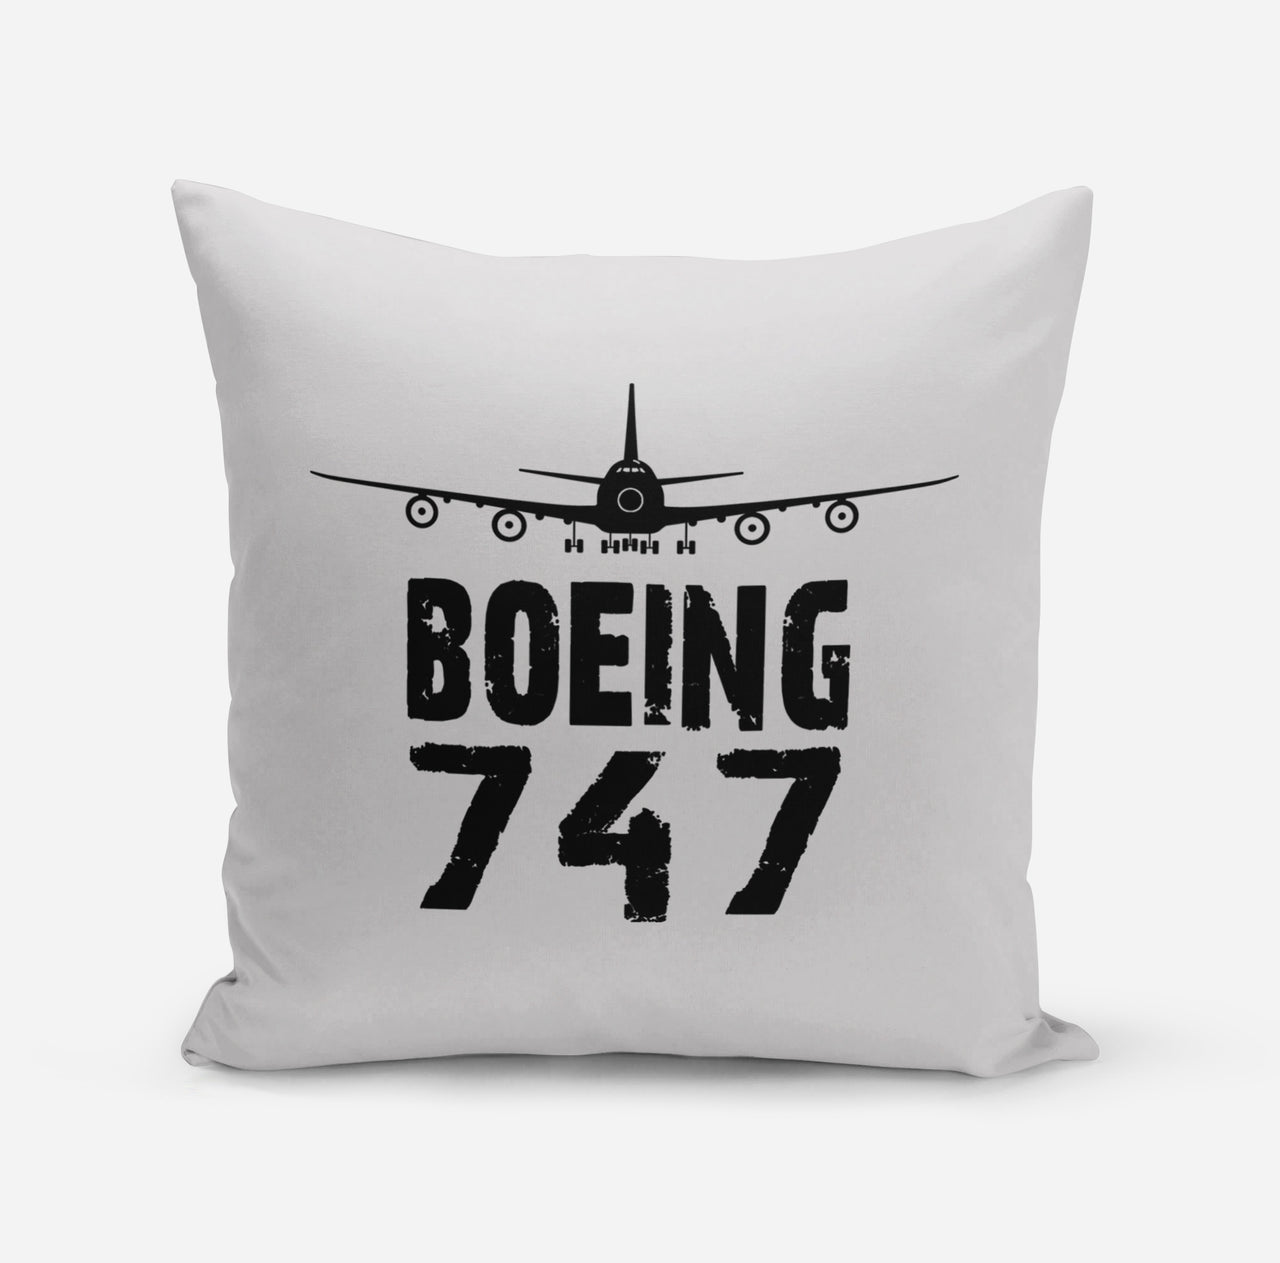 Boeing 747 & Plane Designed Pillows